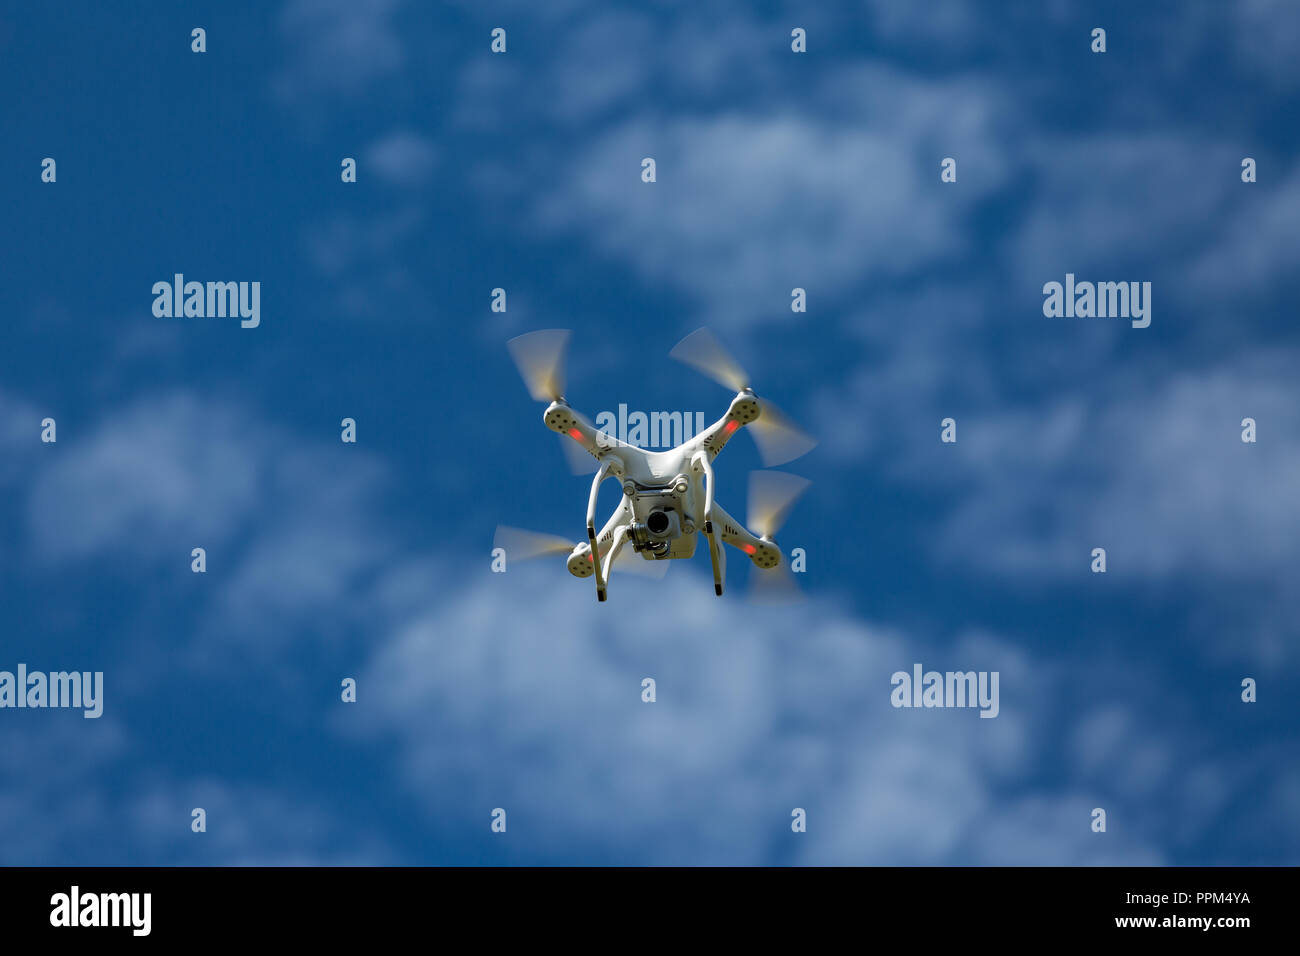 Niedernhausen, Germany, Juner 06th, 2017, Quadcopter drone DJI Phantom flying into blue cloudy sky Stock Photo